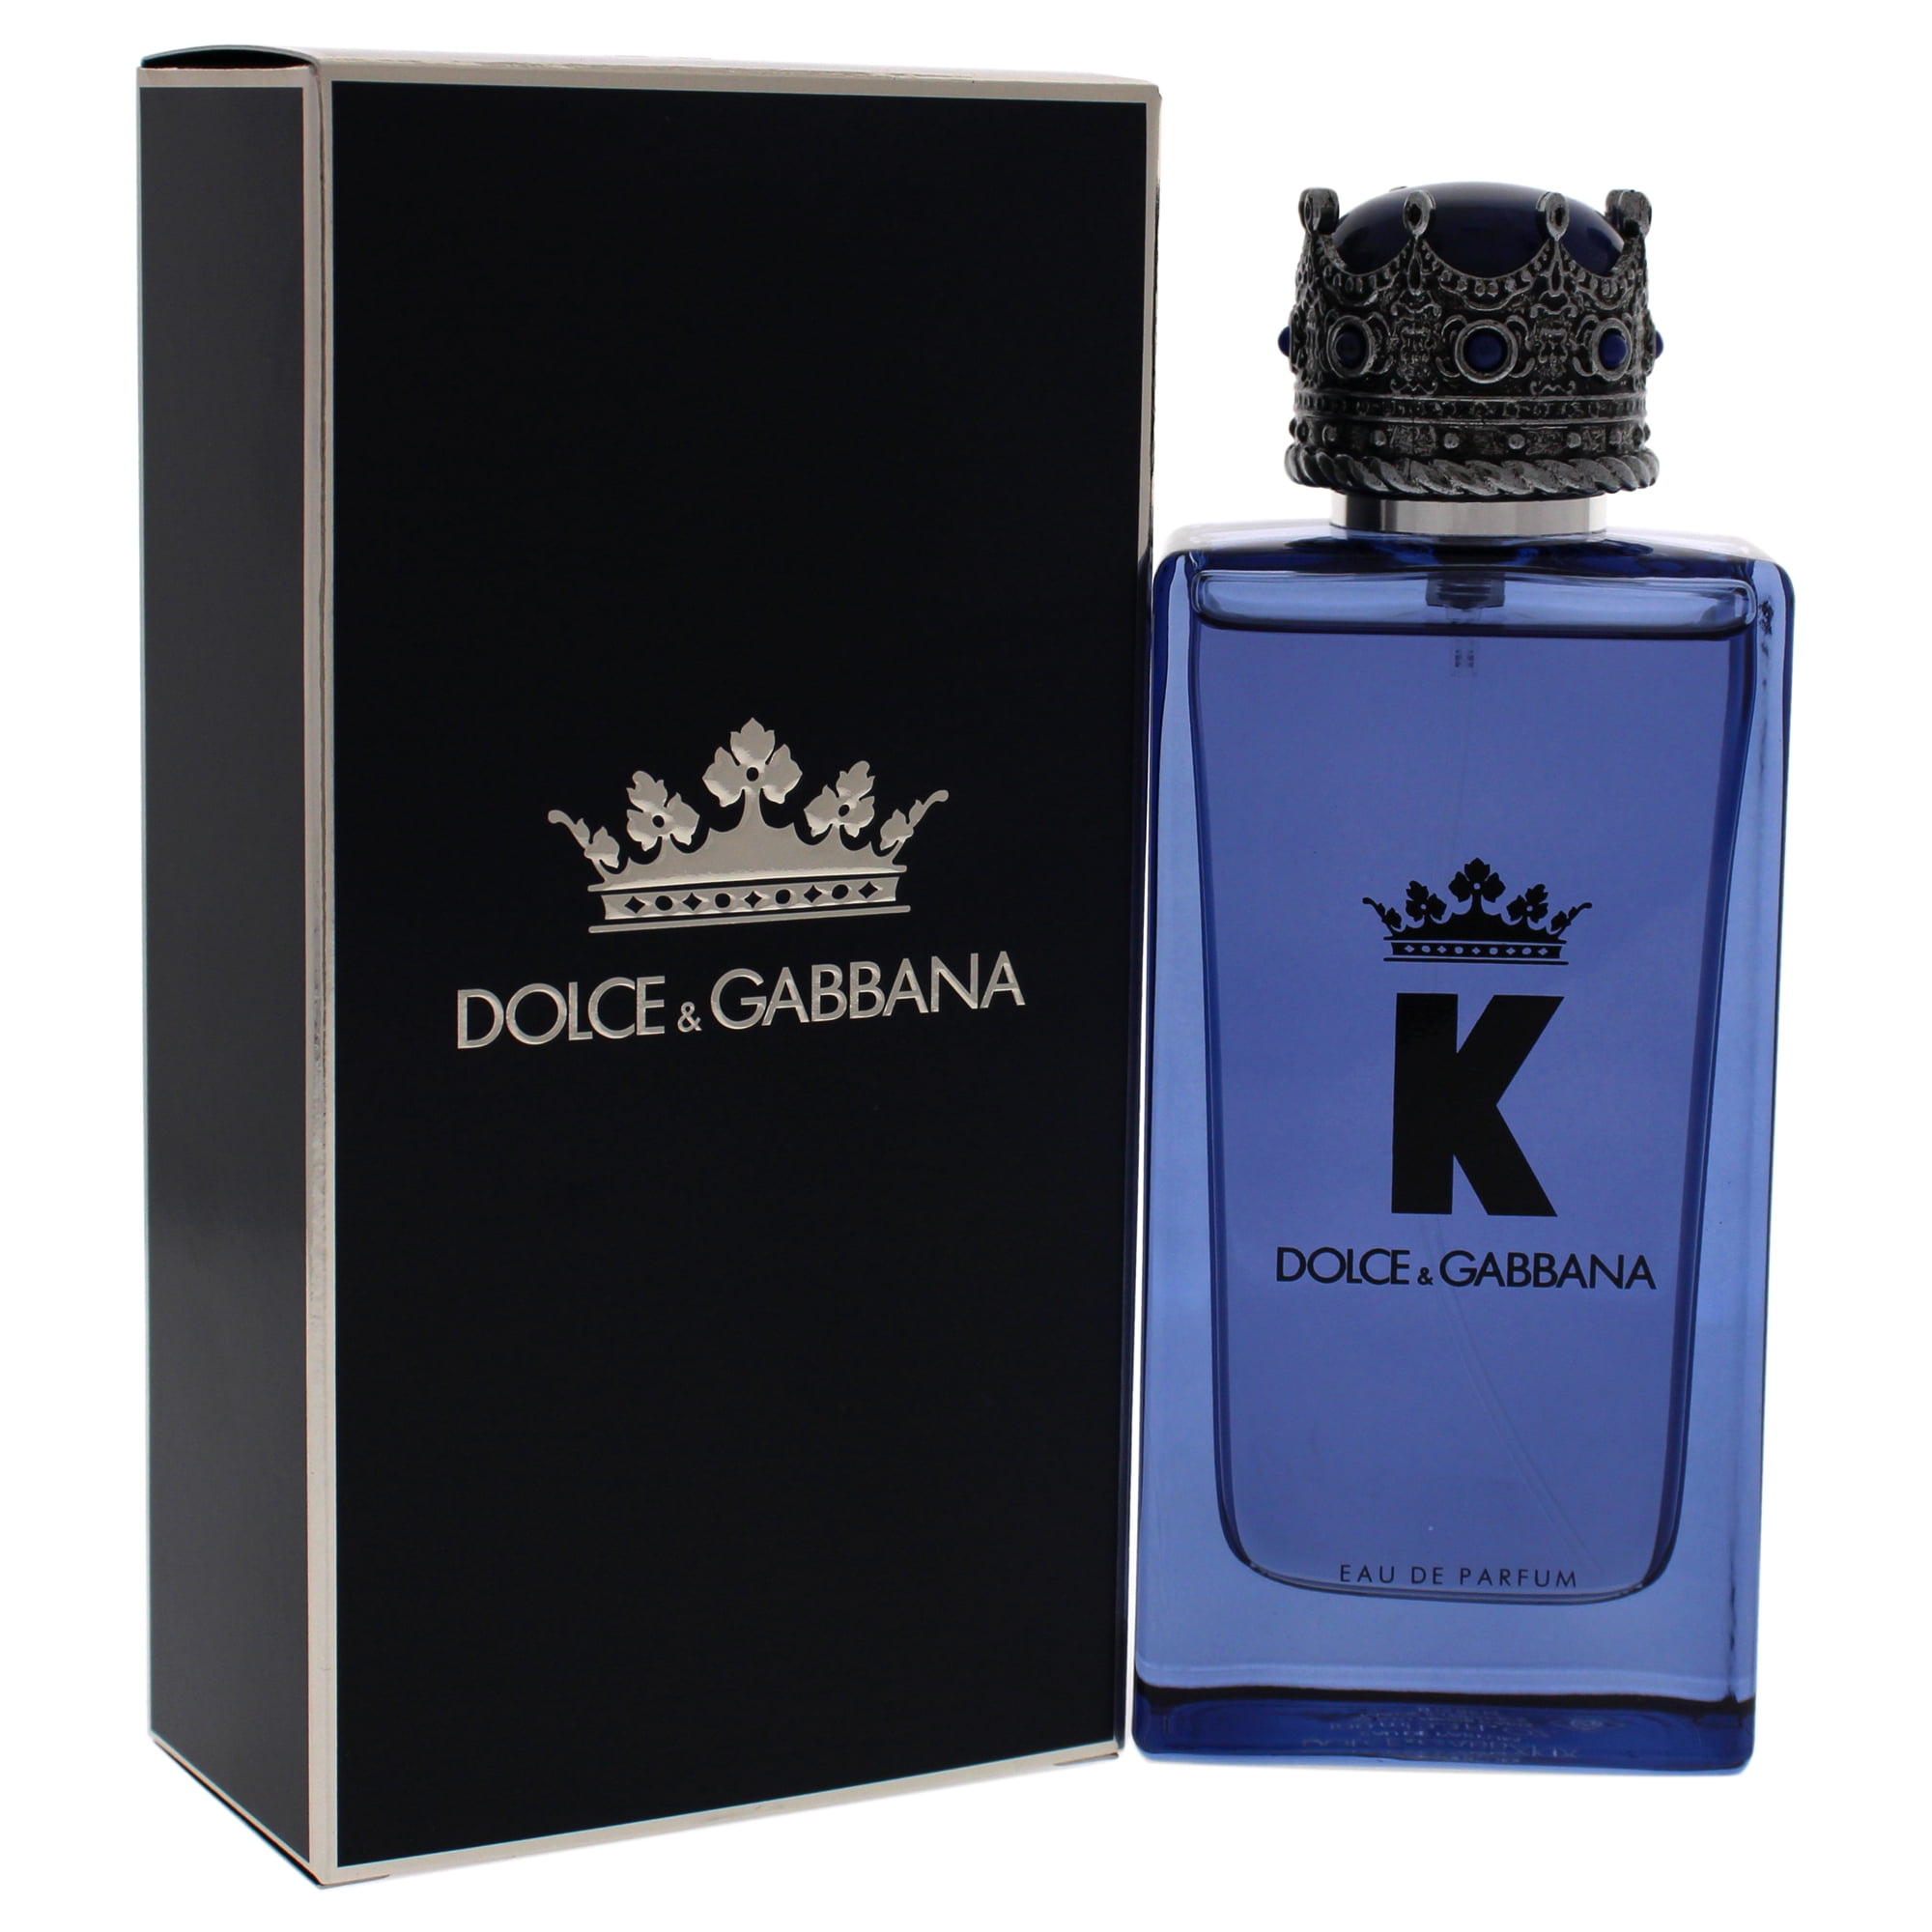 Dolce Gabbana King. Духи Дольче Габбана Кинг. K by Dolce Gabbana. Q by dolce gabbana отзывы